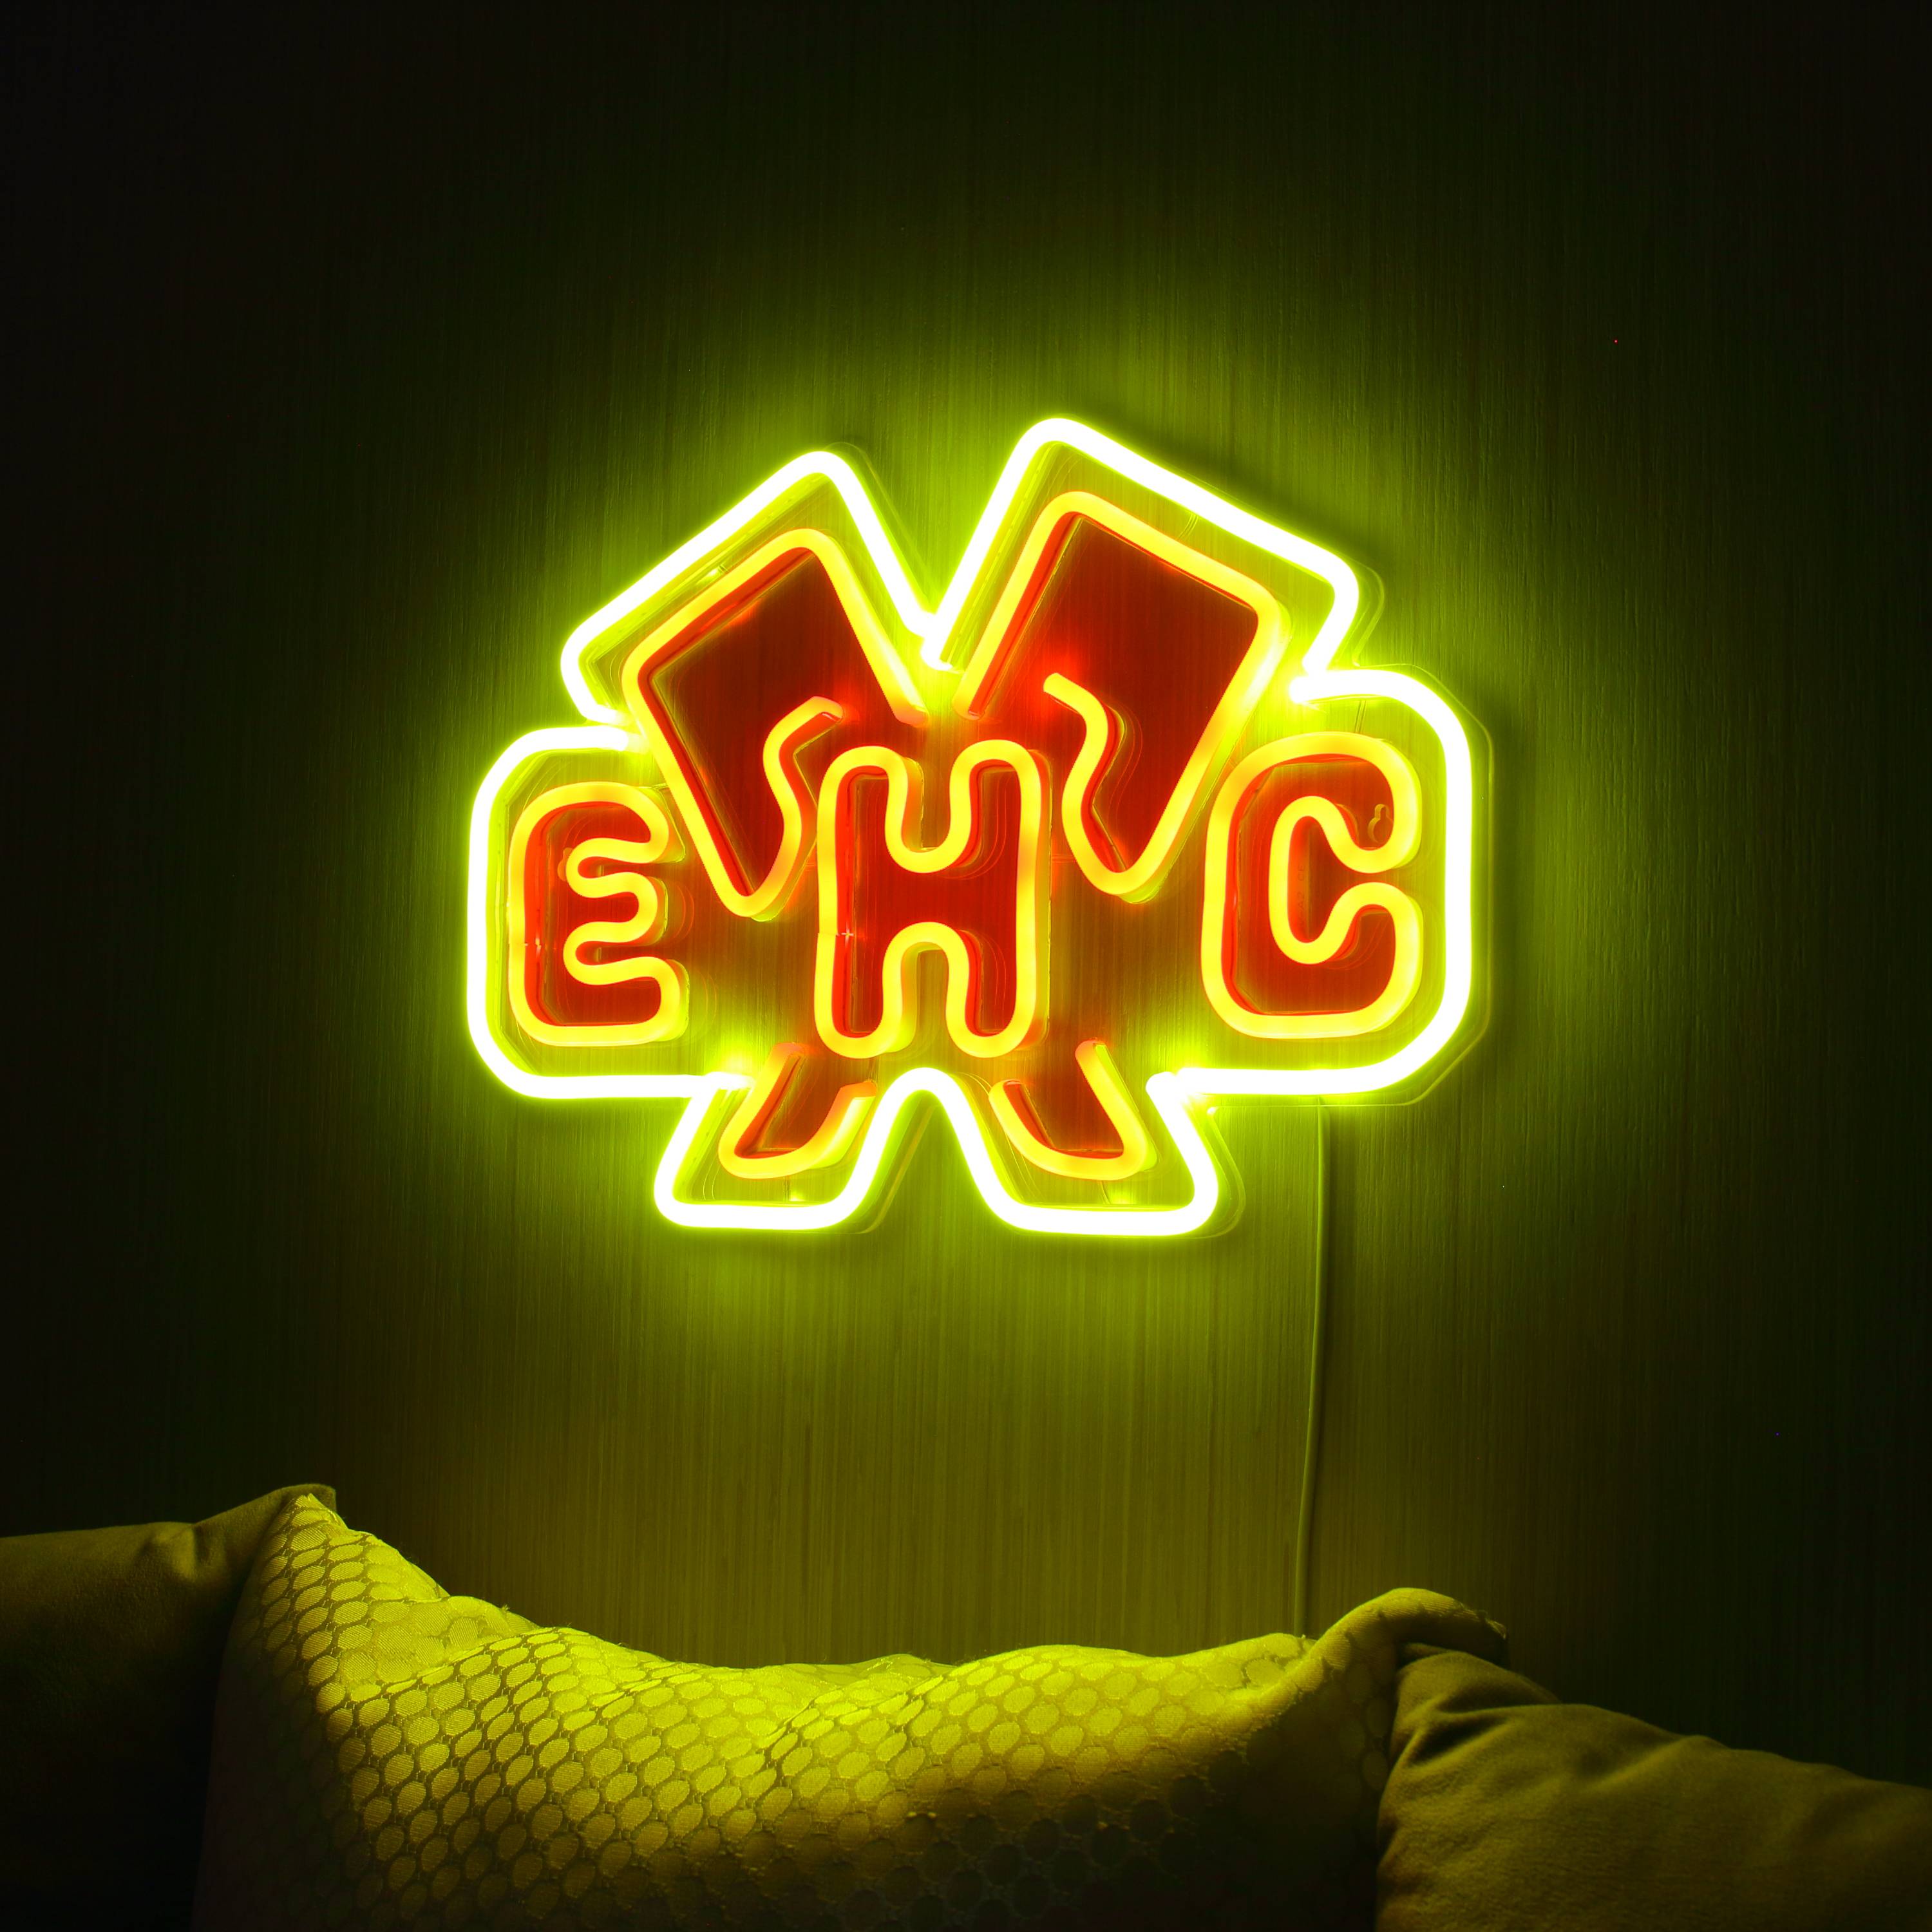 EHC BIEL-BIENNE Large Flex Neon LED Sign